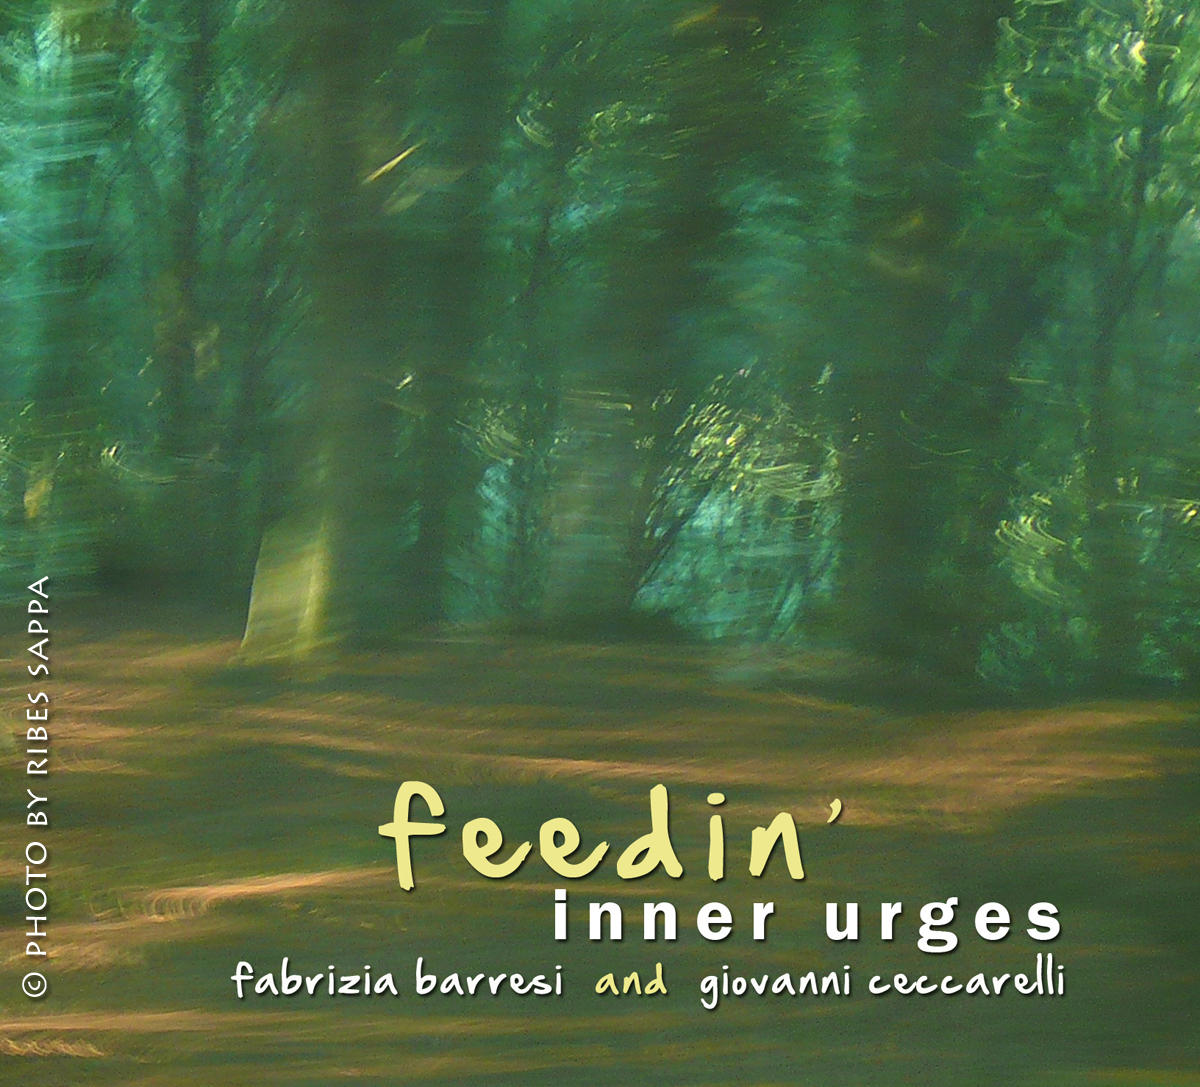 CD Cover Feedin by Inner Urges